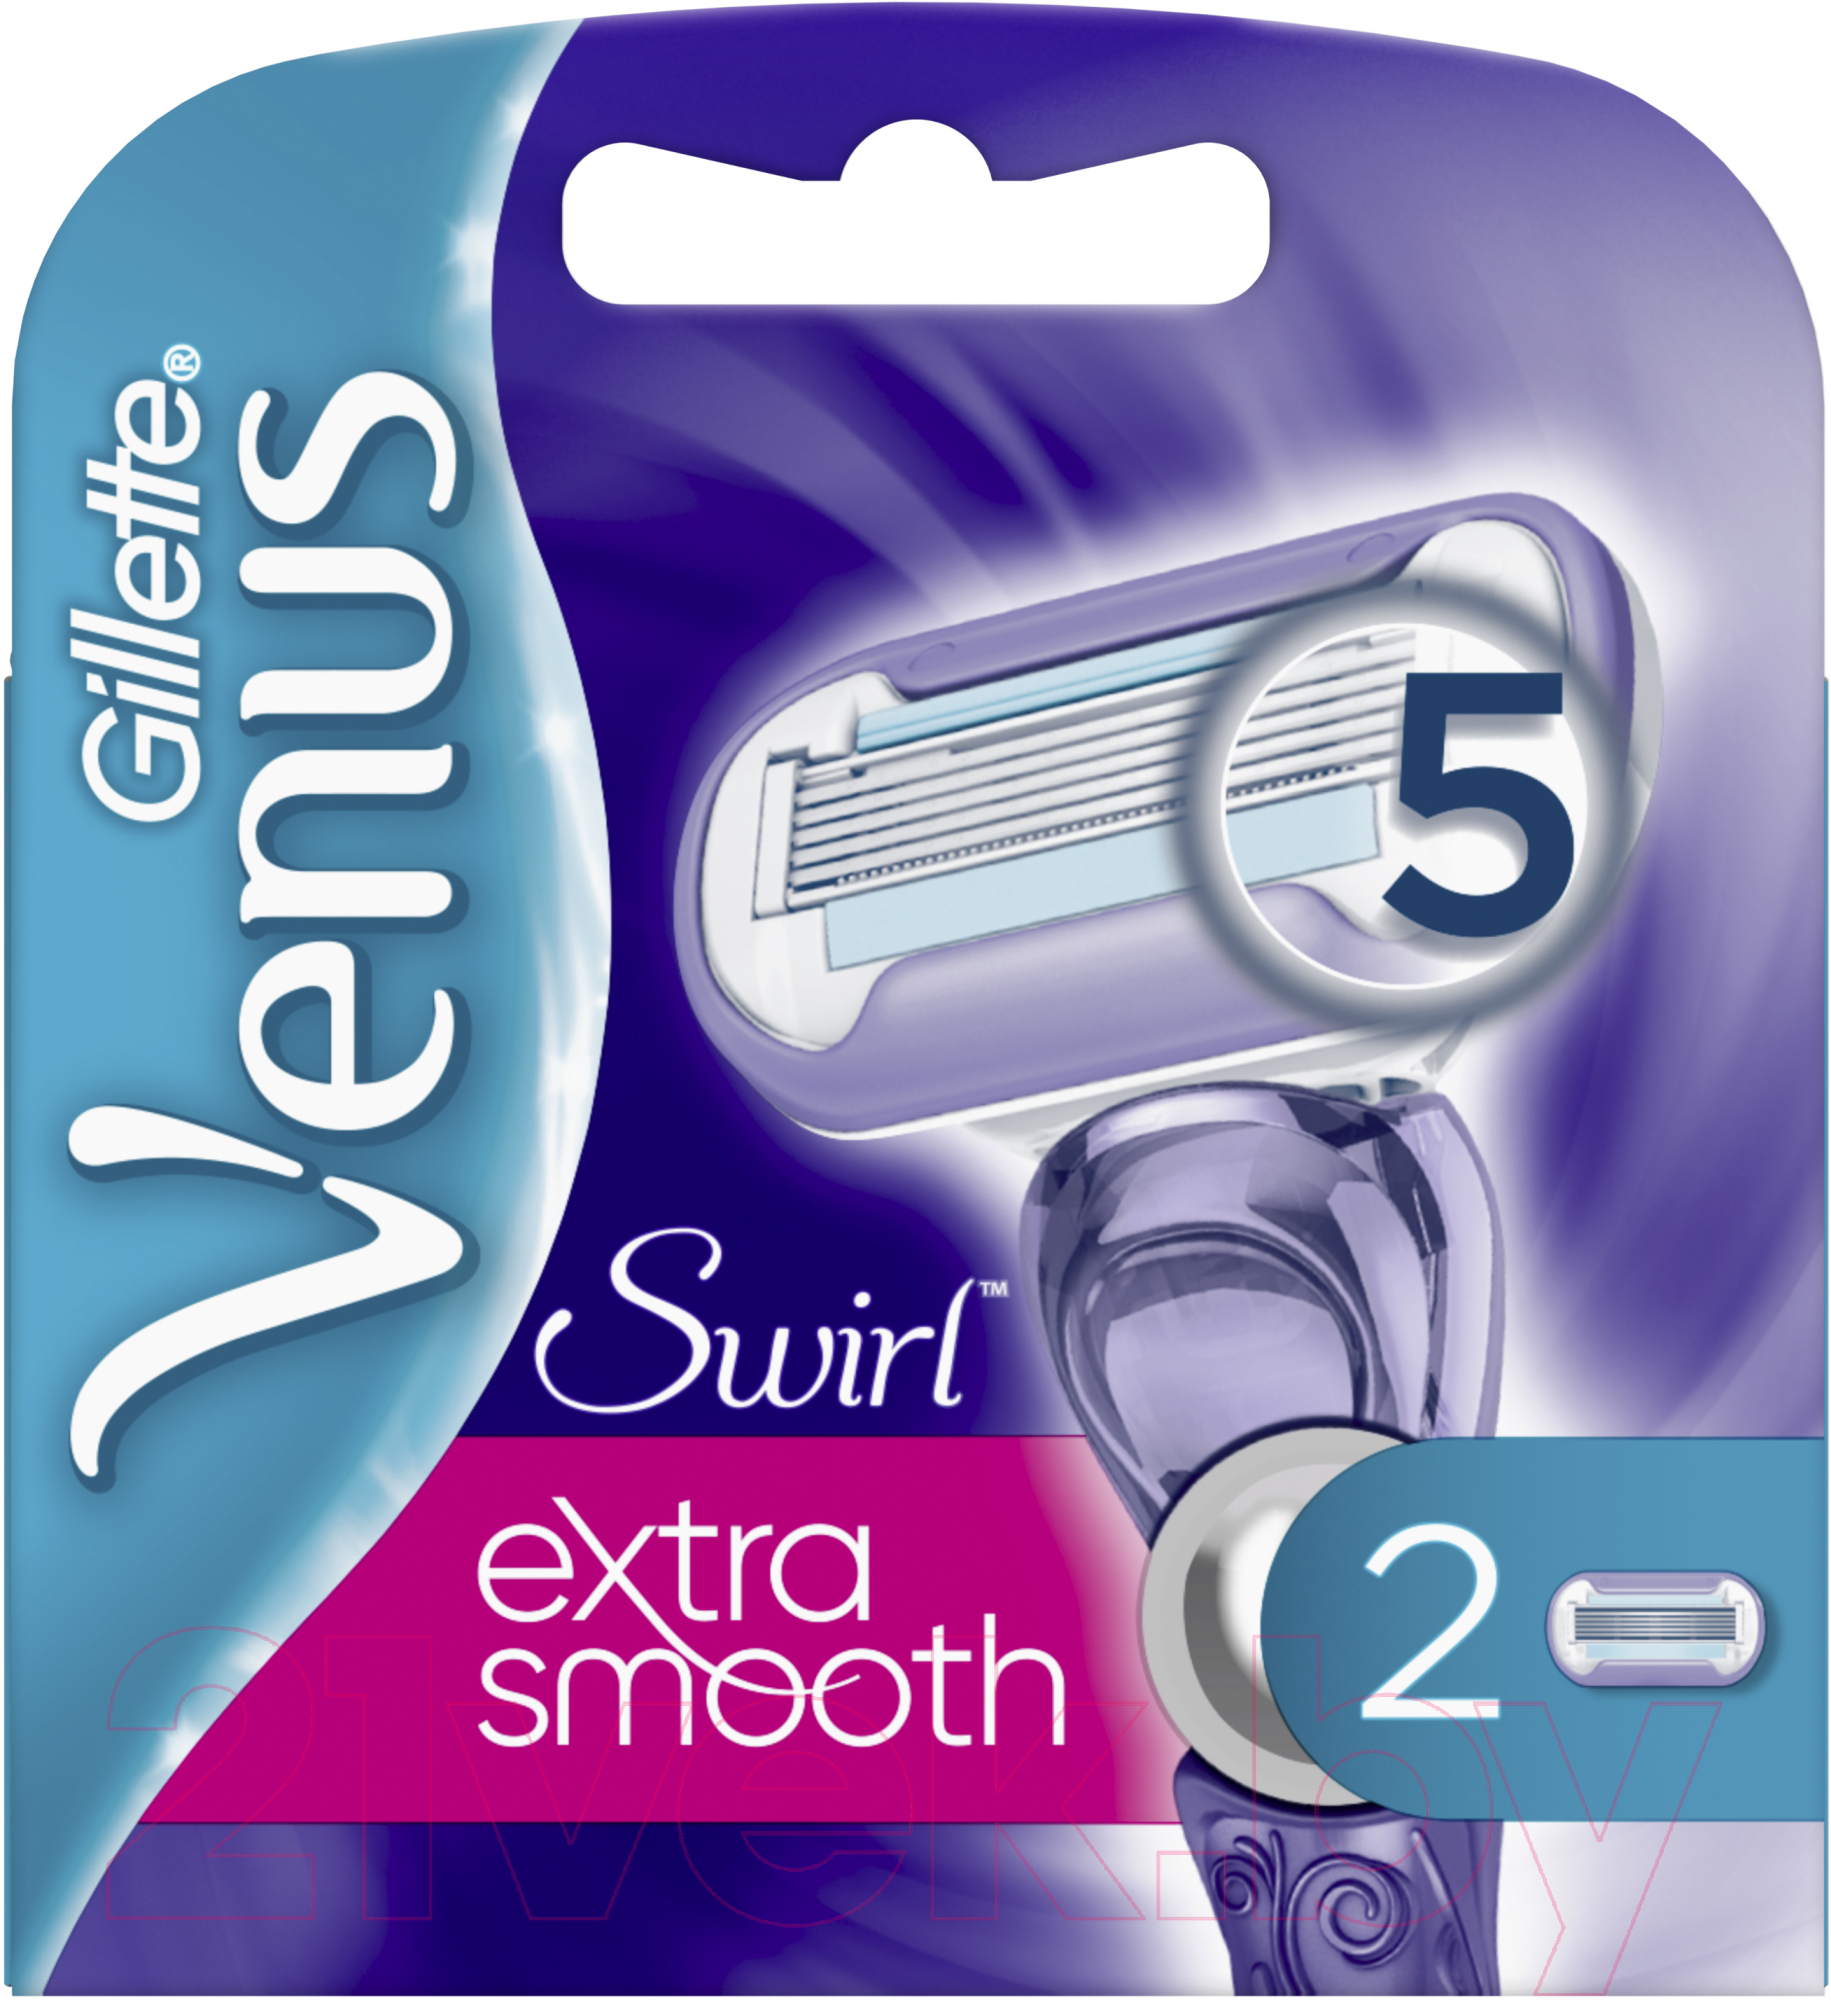 Набор сменных кассет Gillette Venus Swirl